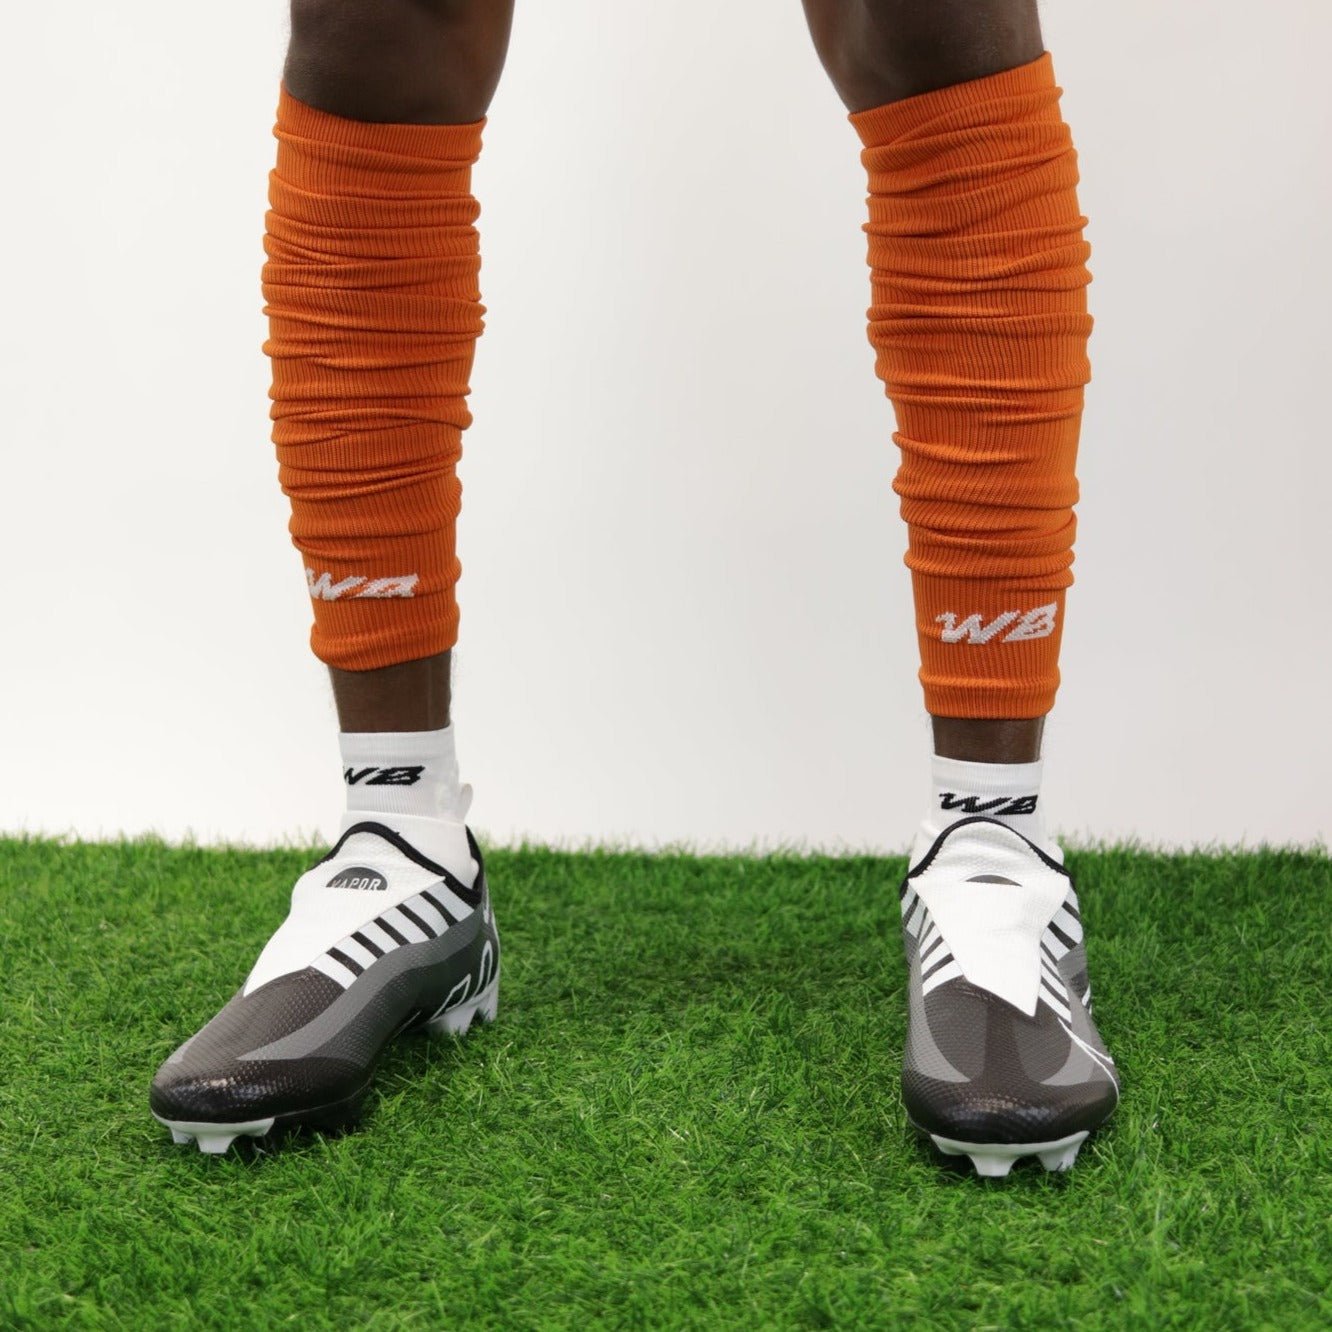 ADULT FOOTBALL LEG SLEEVES 2.0 (BURNT ORANGE) - We Ball Sports